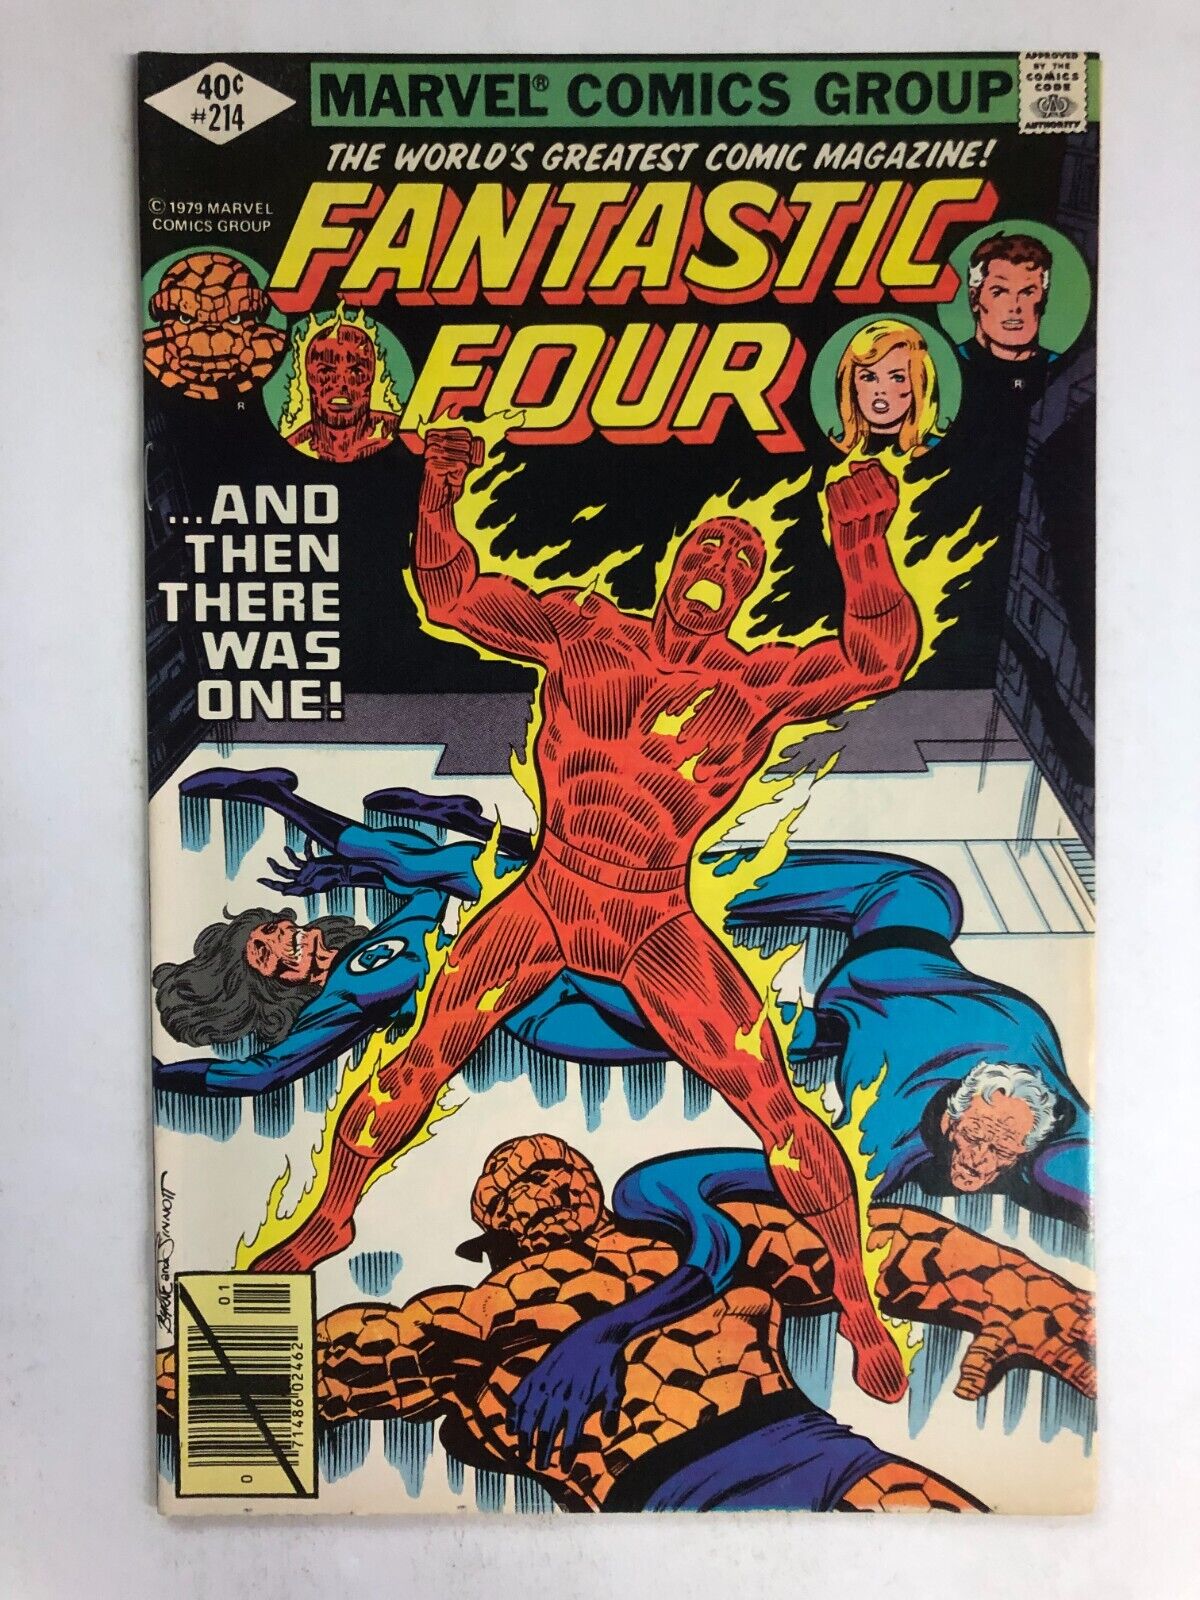 Fantastic Four #214 - Marv Wolfman - 1979 - Possible CGC comic